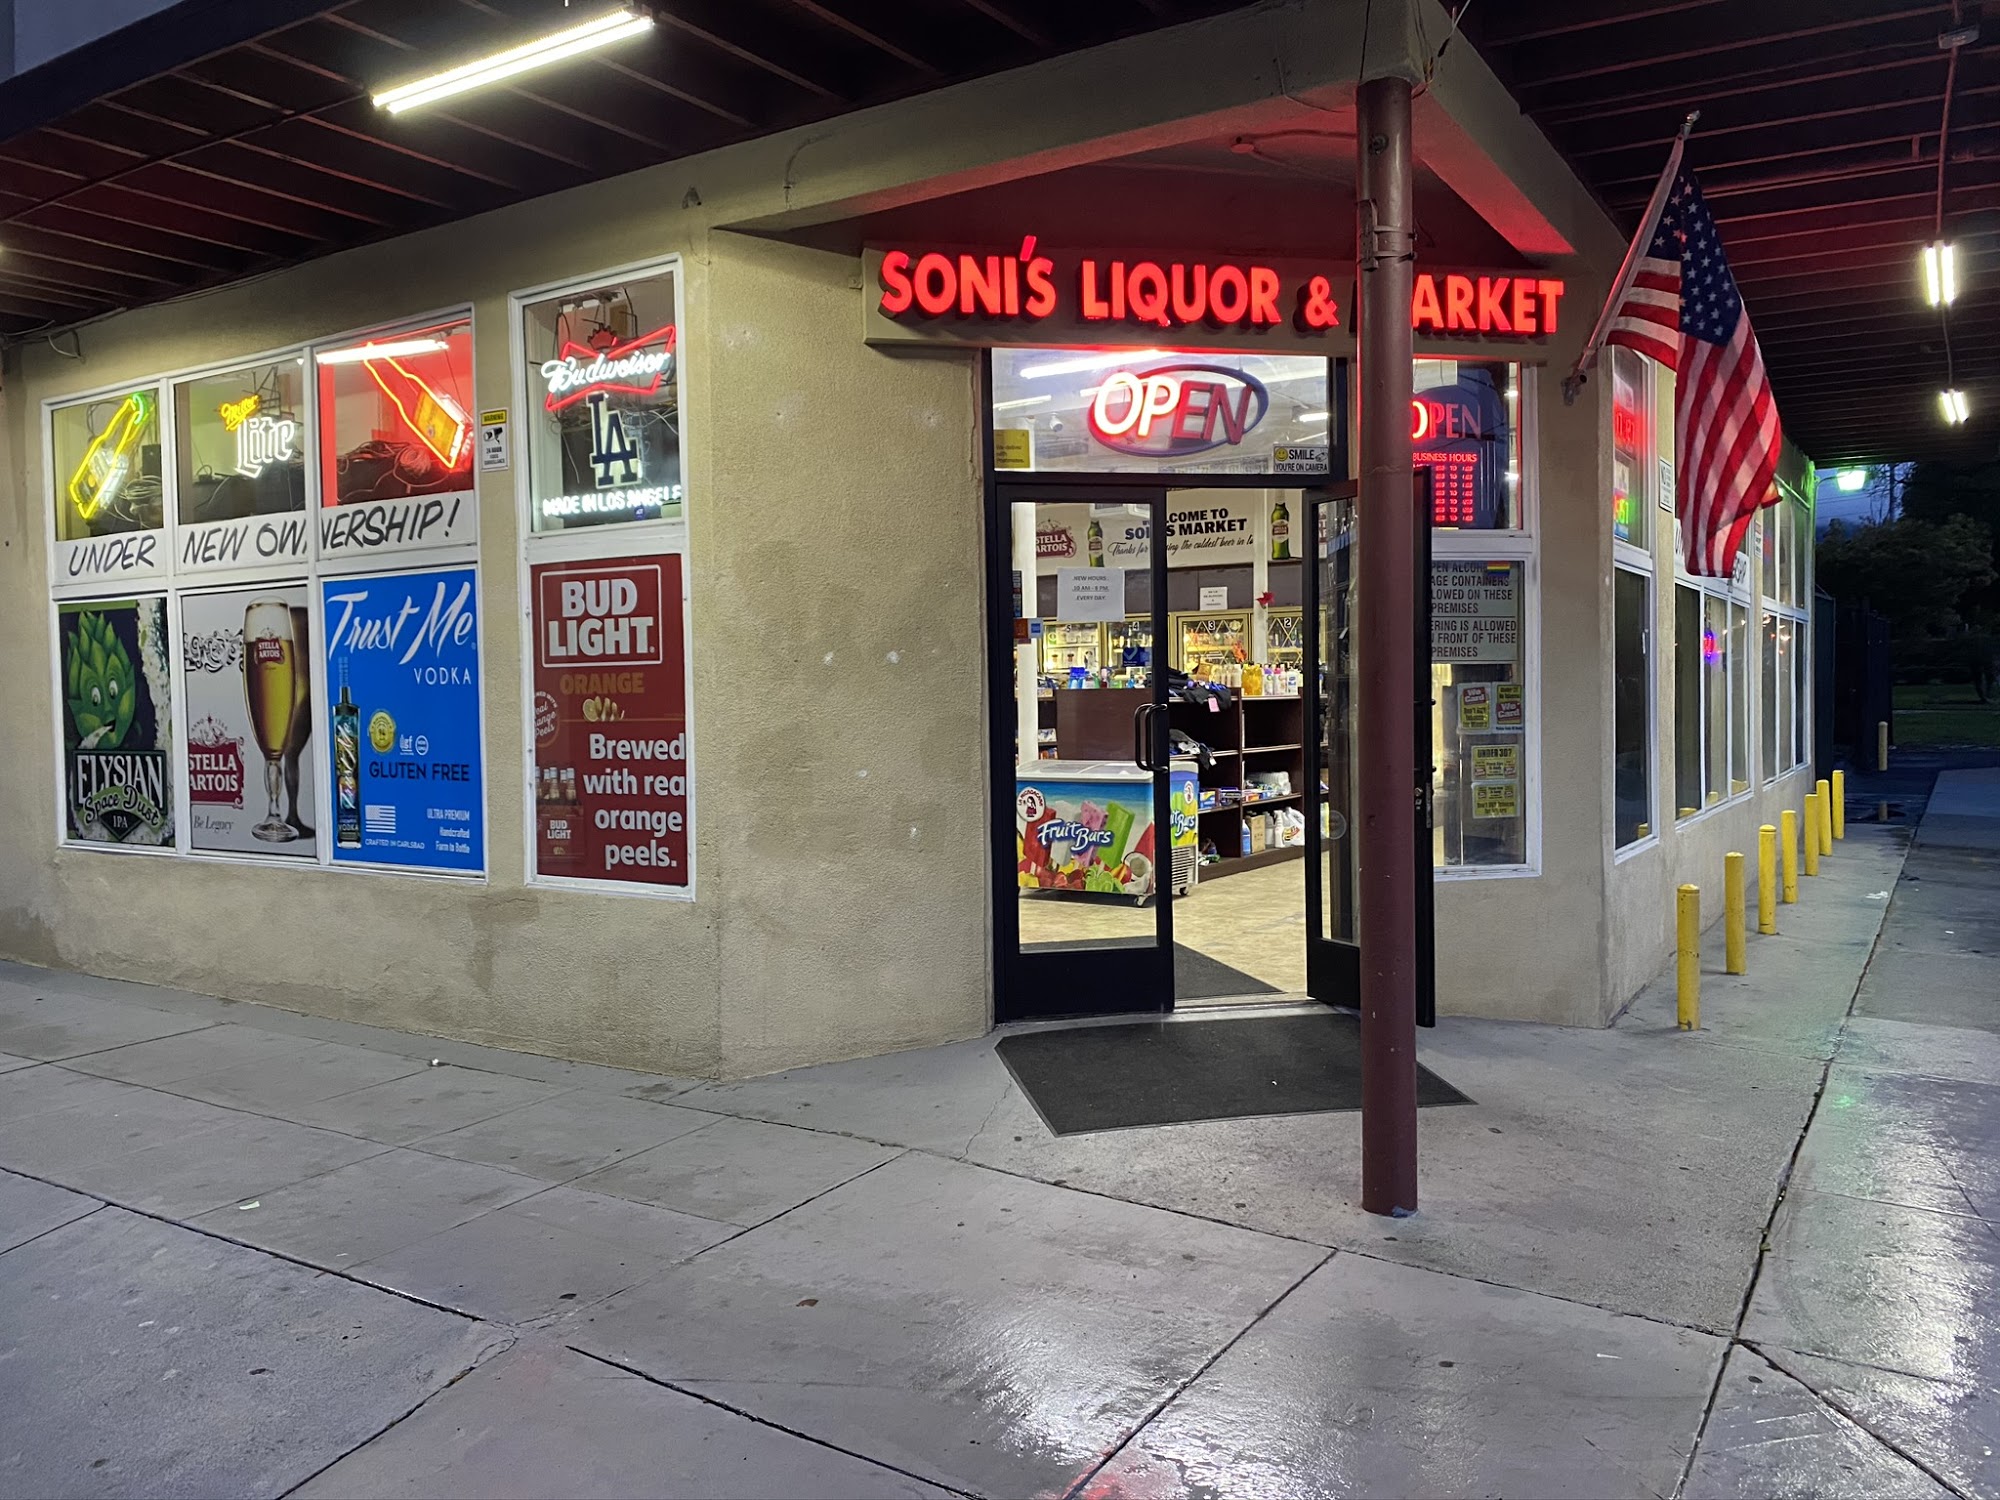 Soni's Liquor & market